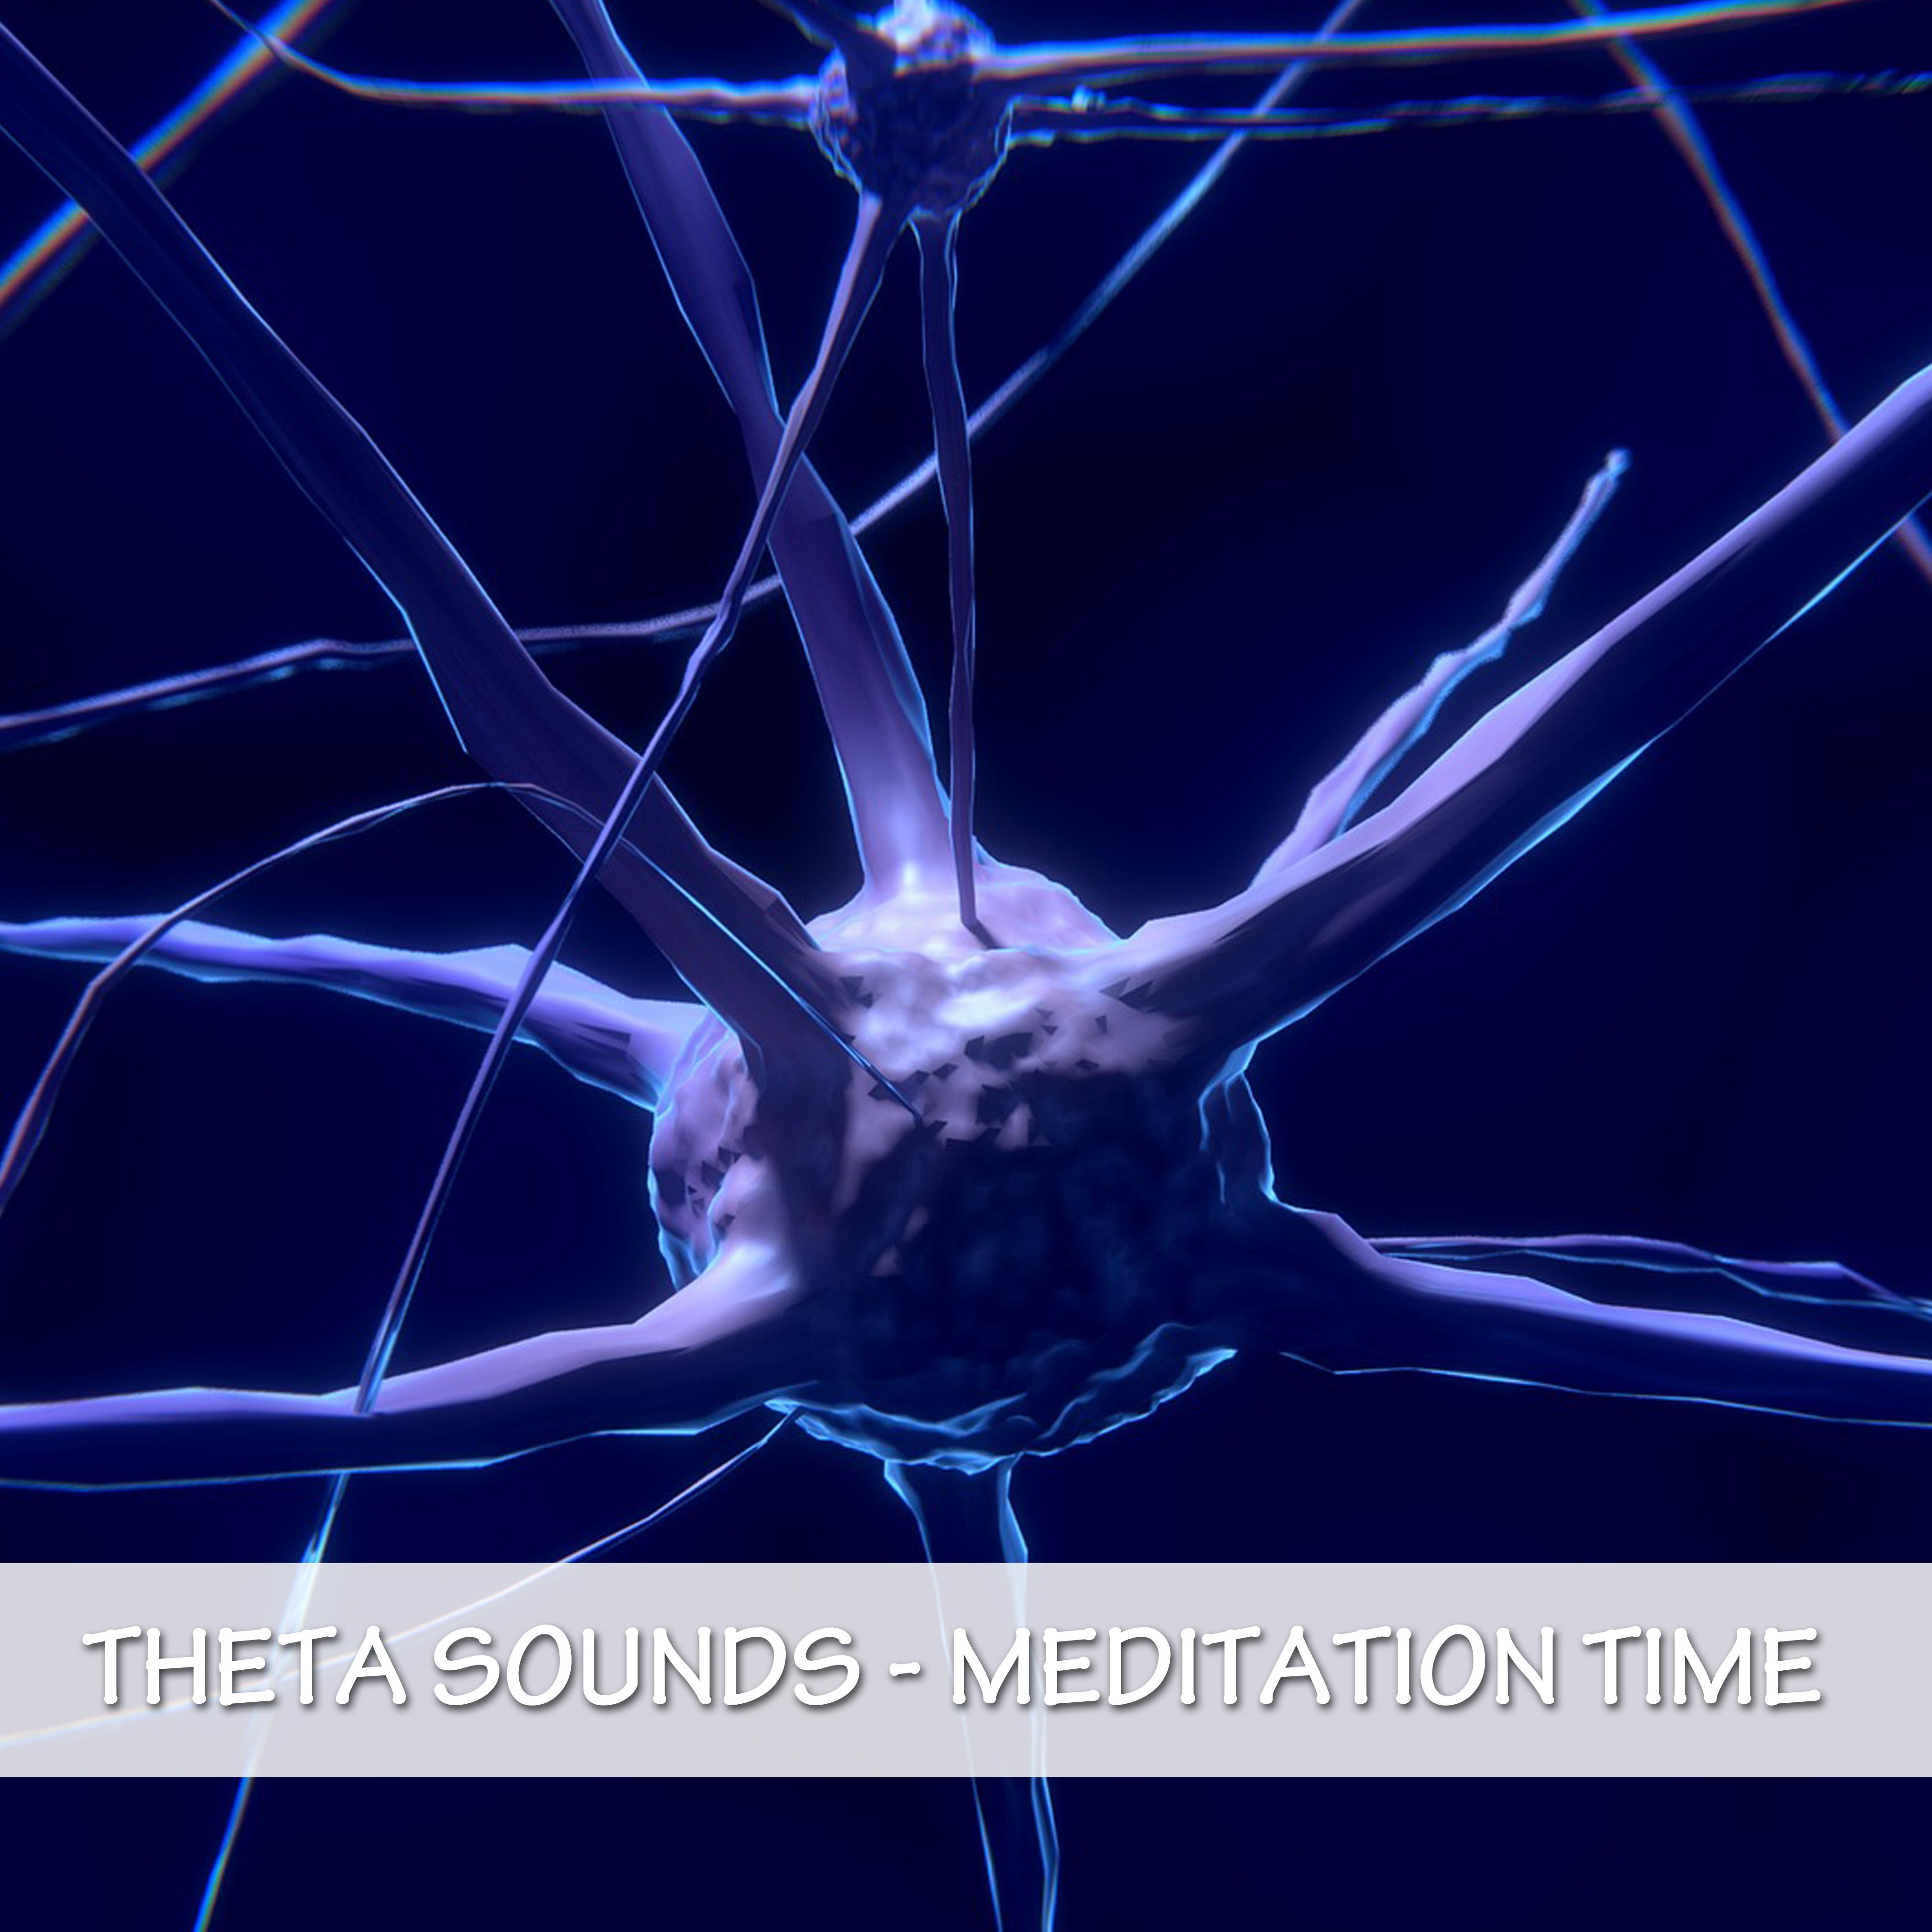 15 Theta Sounds - Meditation Time